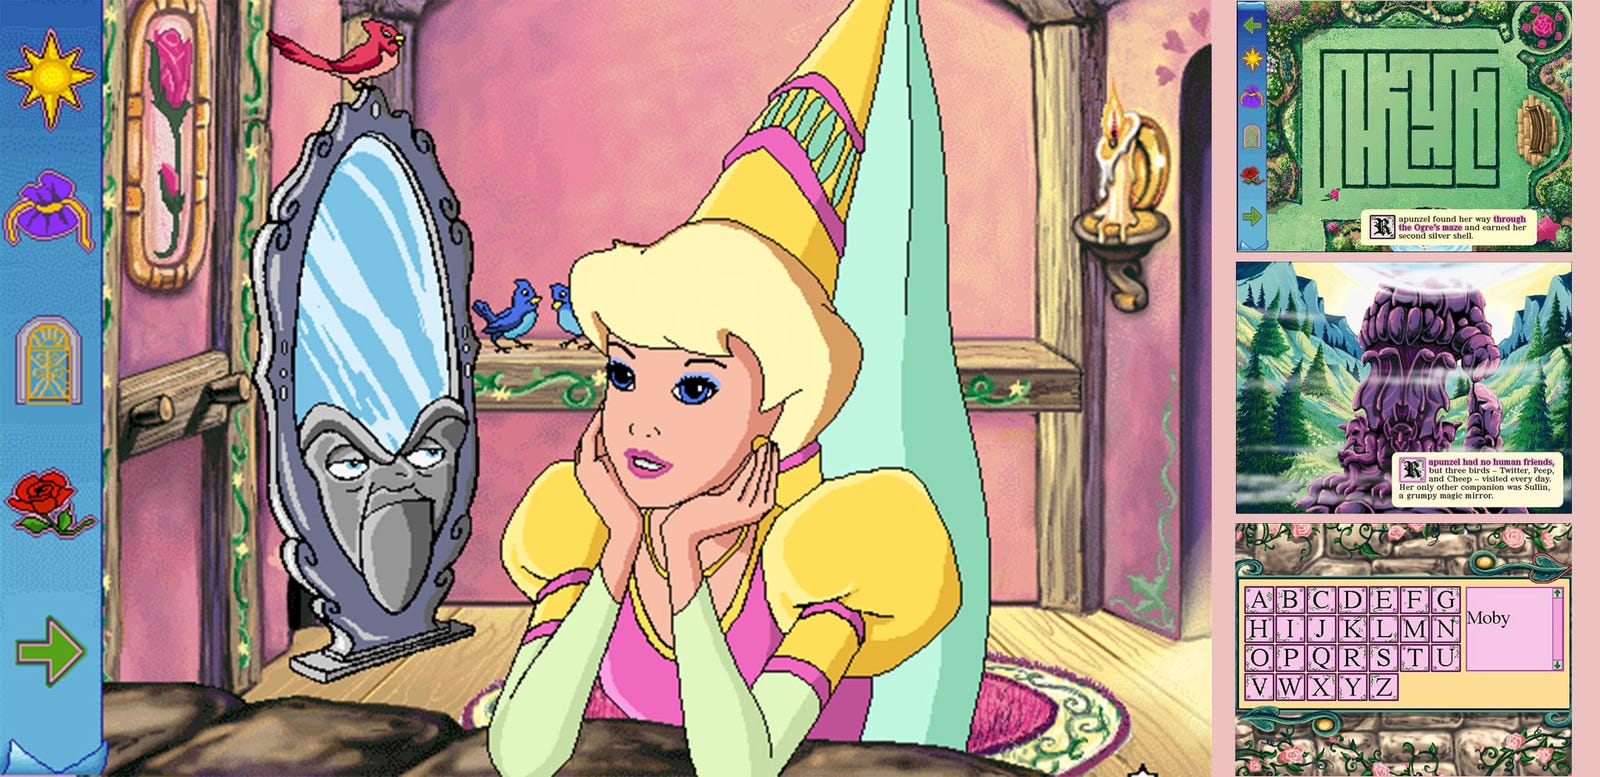 barbie as rapunzel a creative adventure game play online